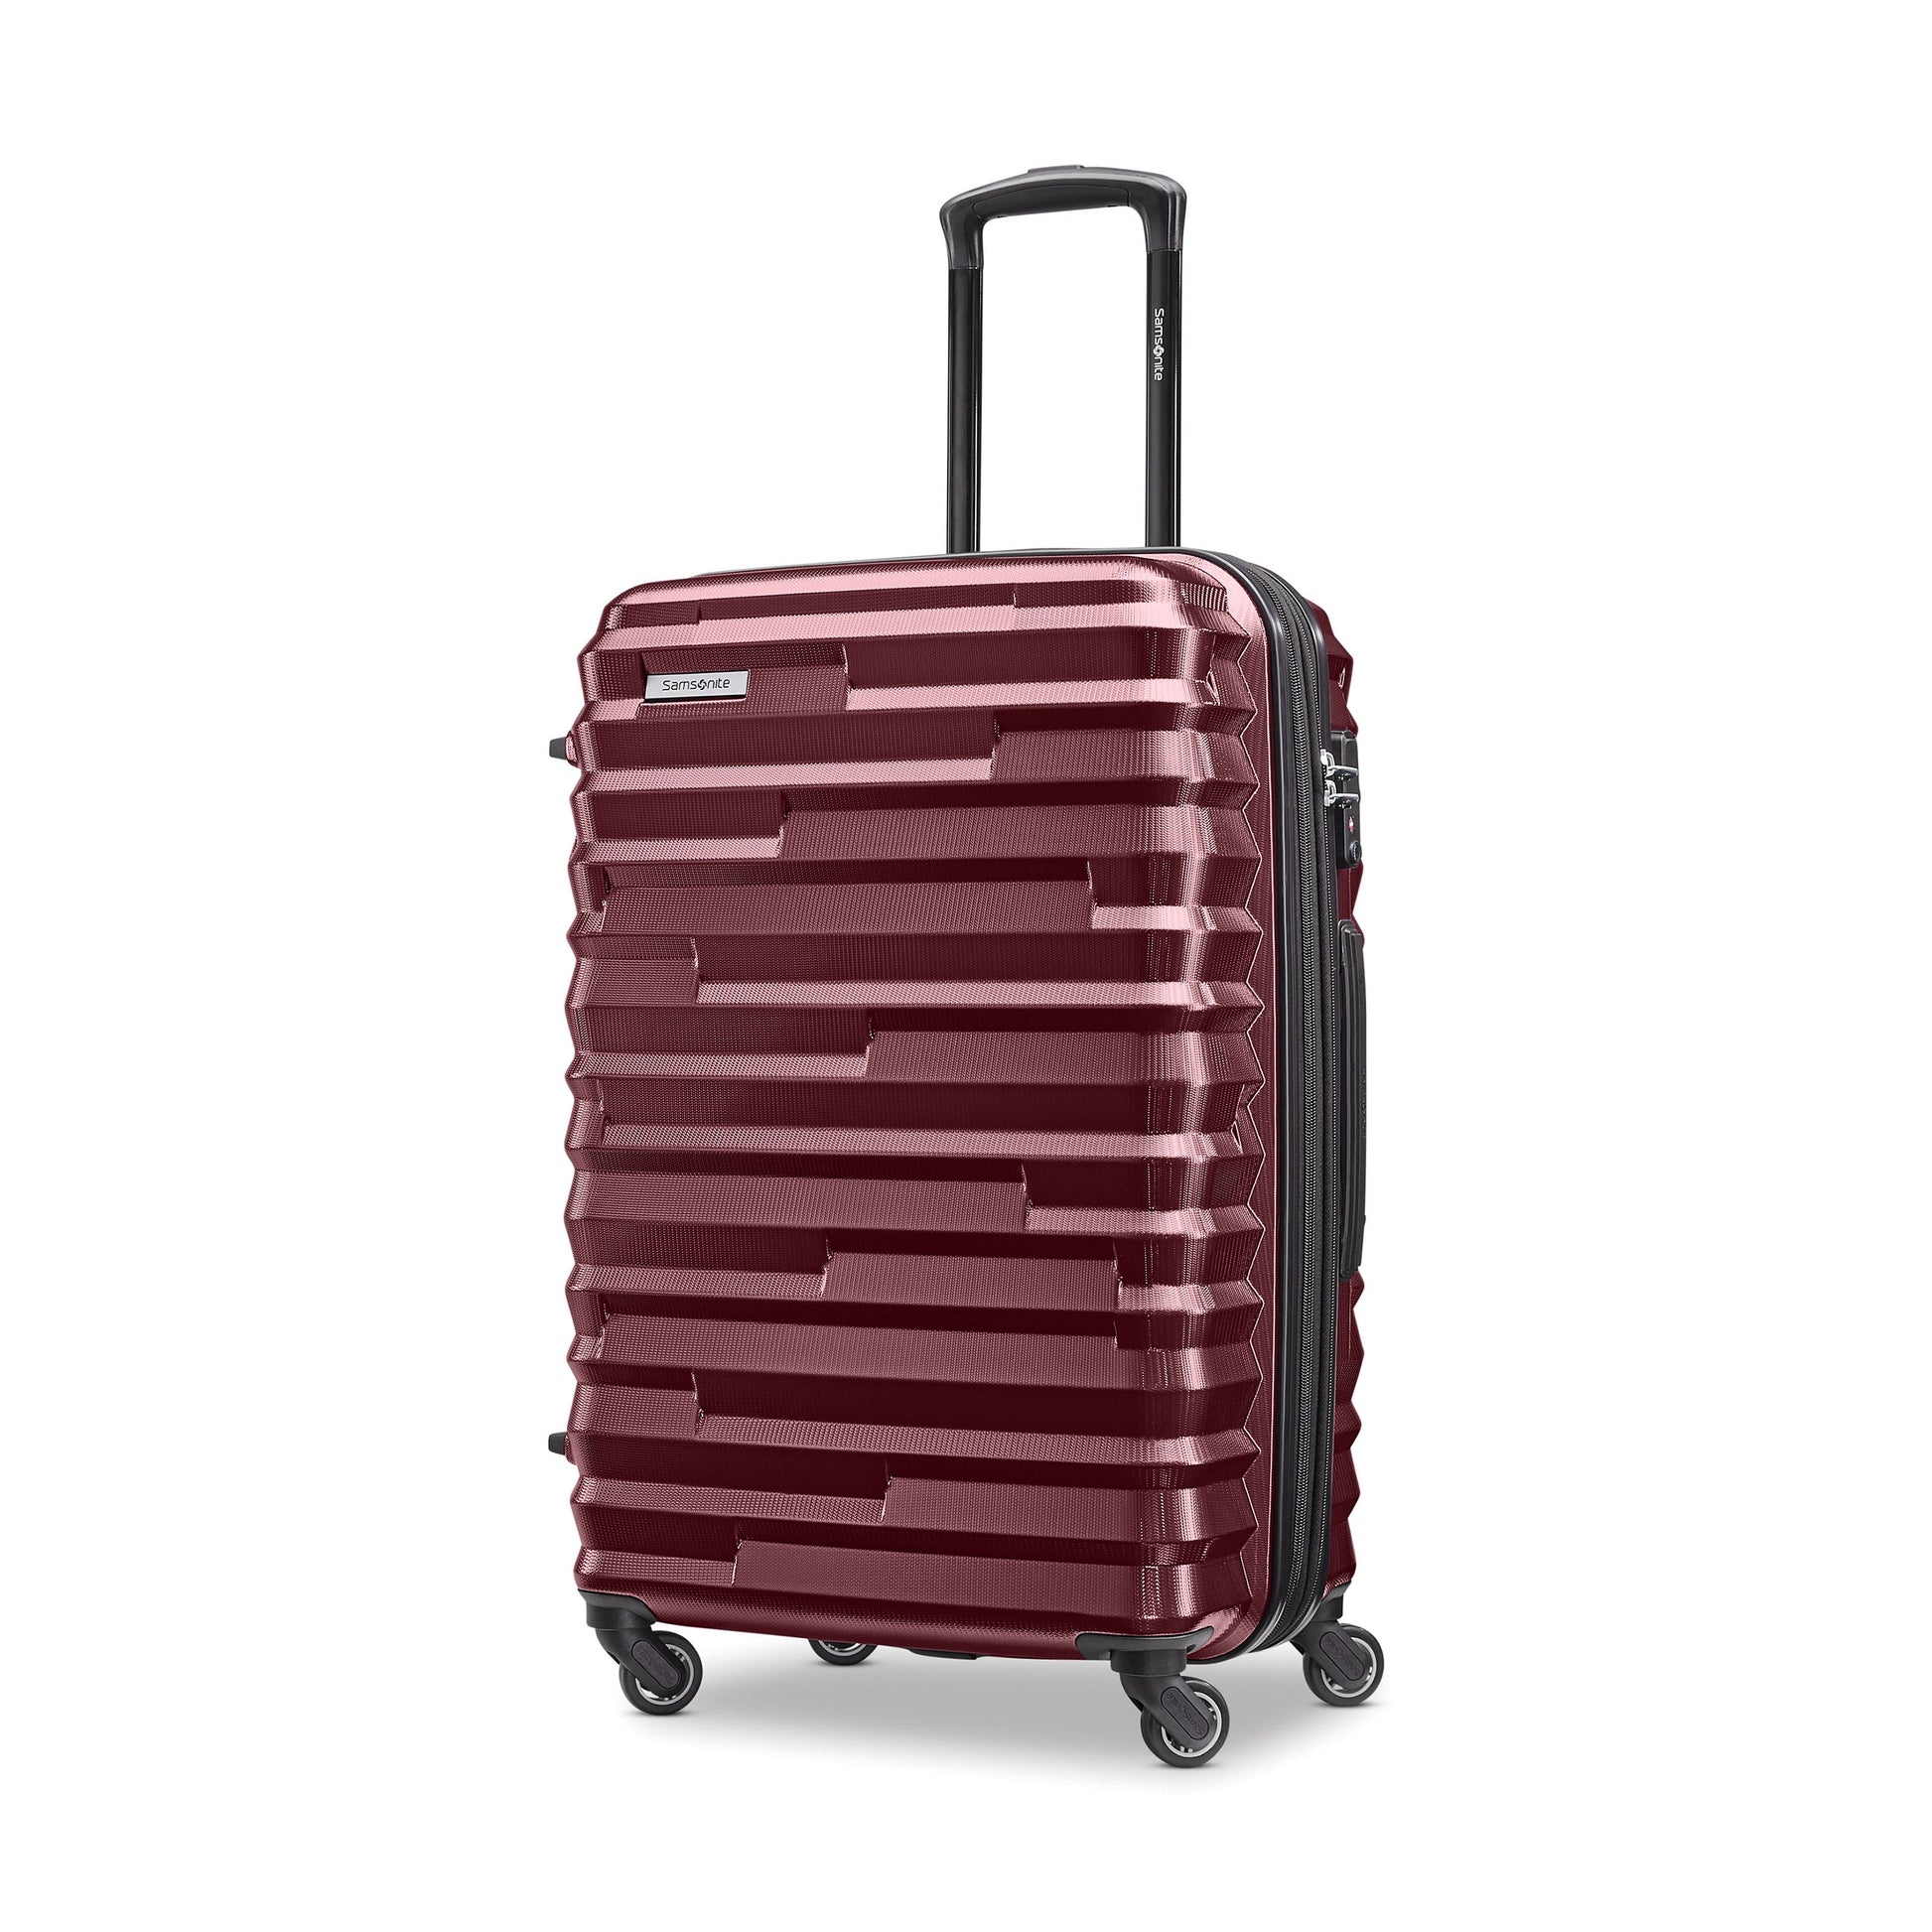 Samsonite Ziplite 4.0 Spinner Medium Expandable Luggage - Merlot